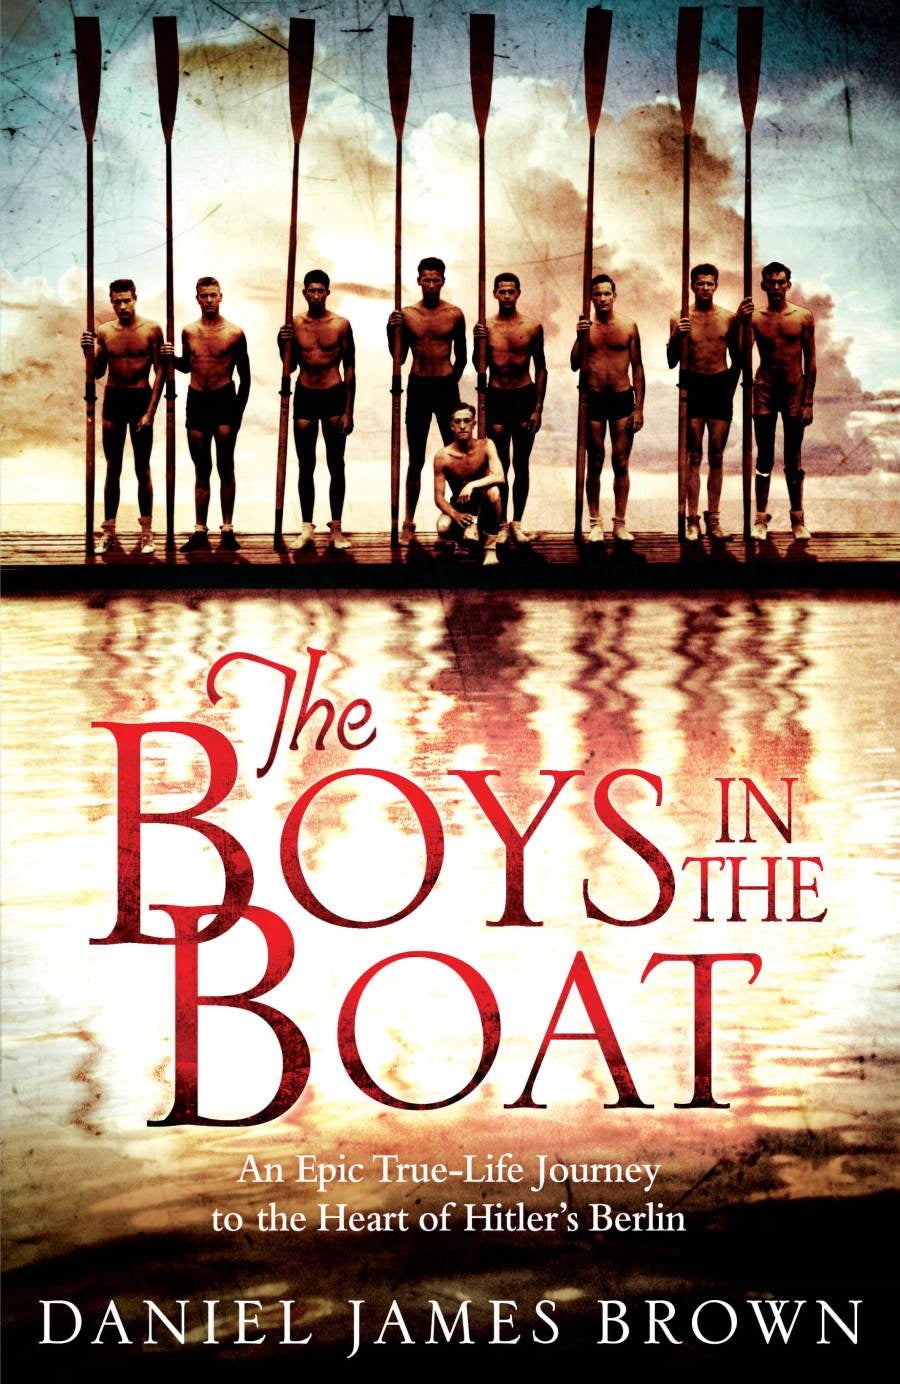 The Boys in the Boat - Daniel James Brown